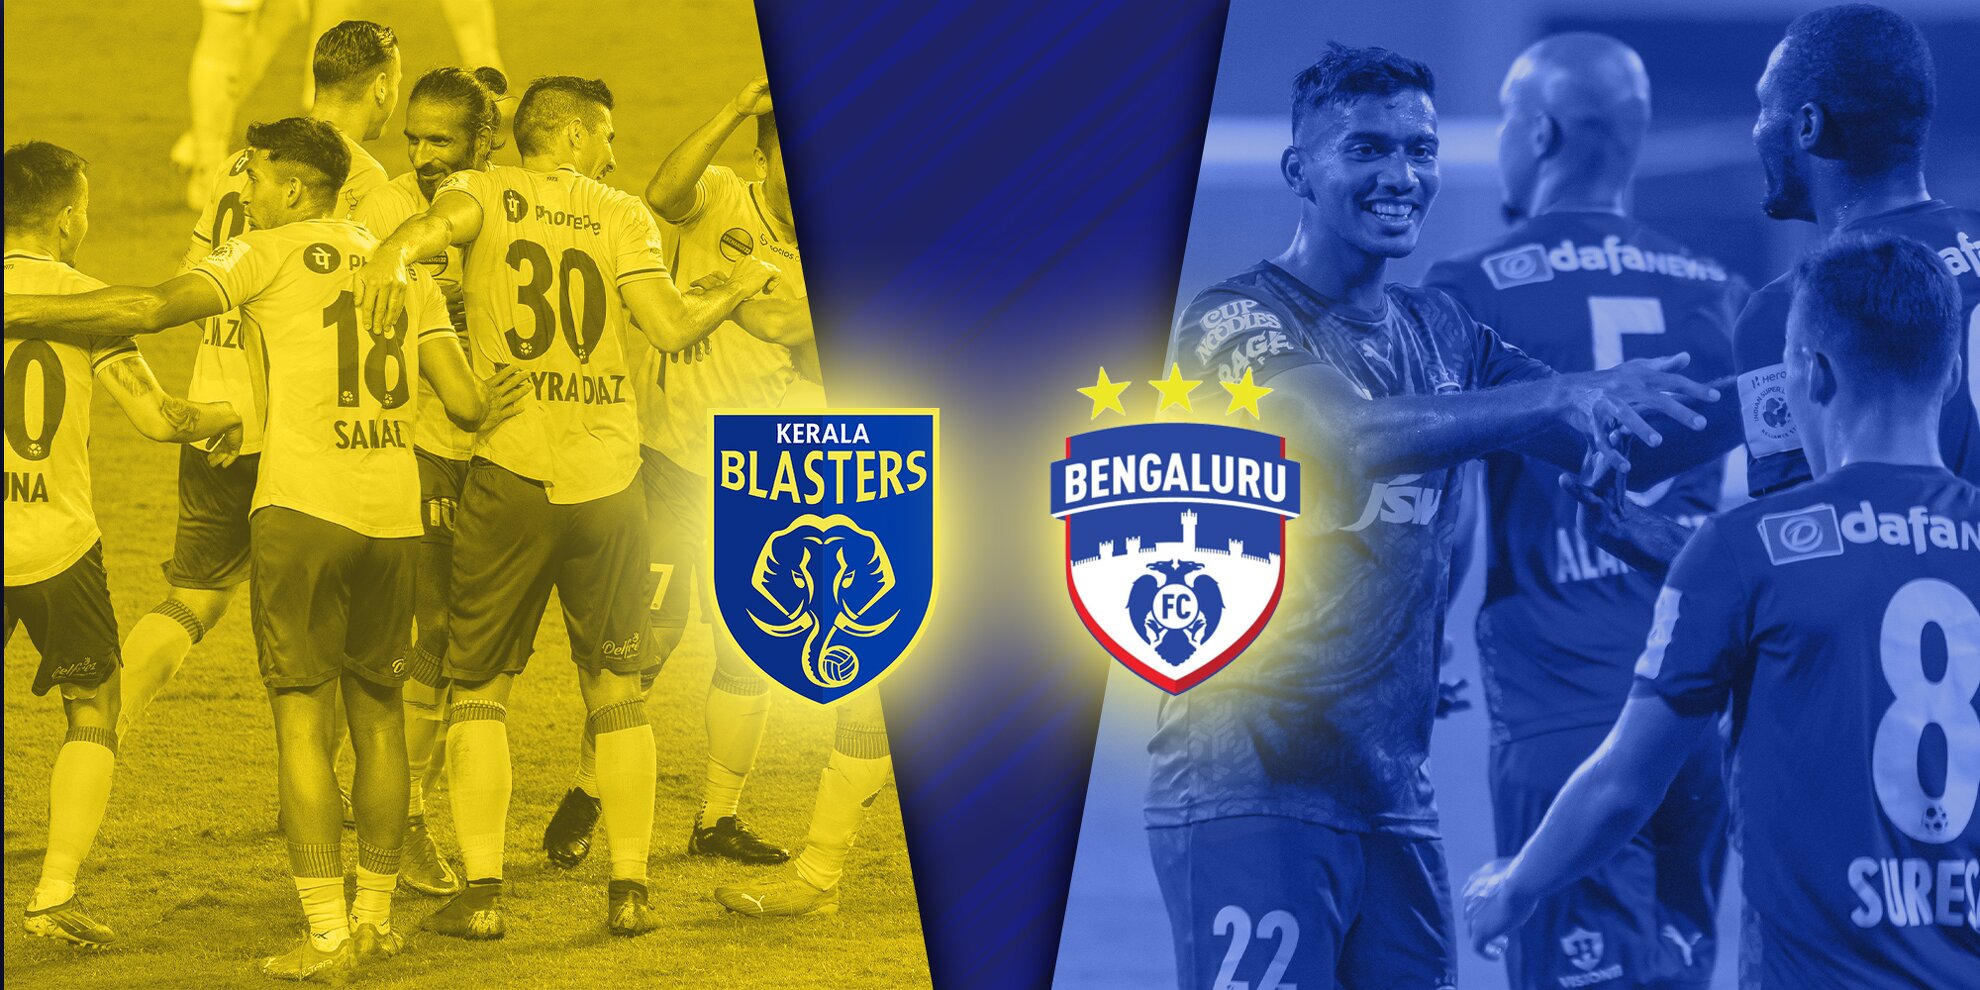 Kerala Blasters vs Bengaluru FC